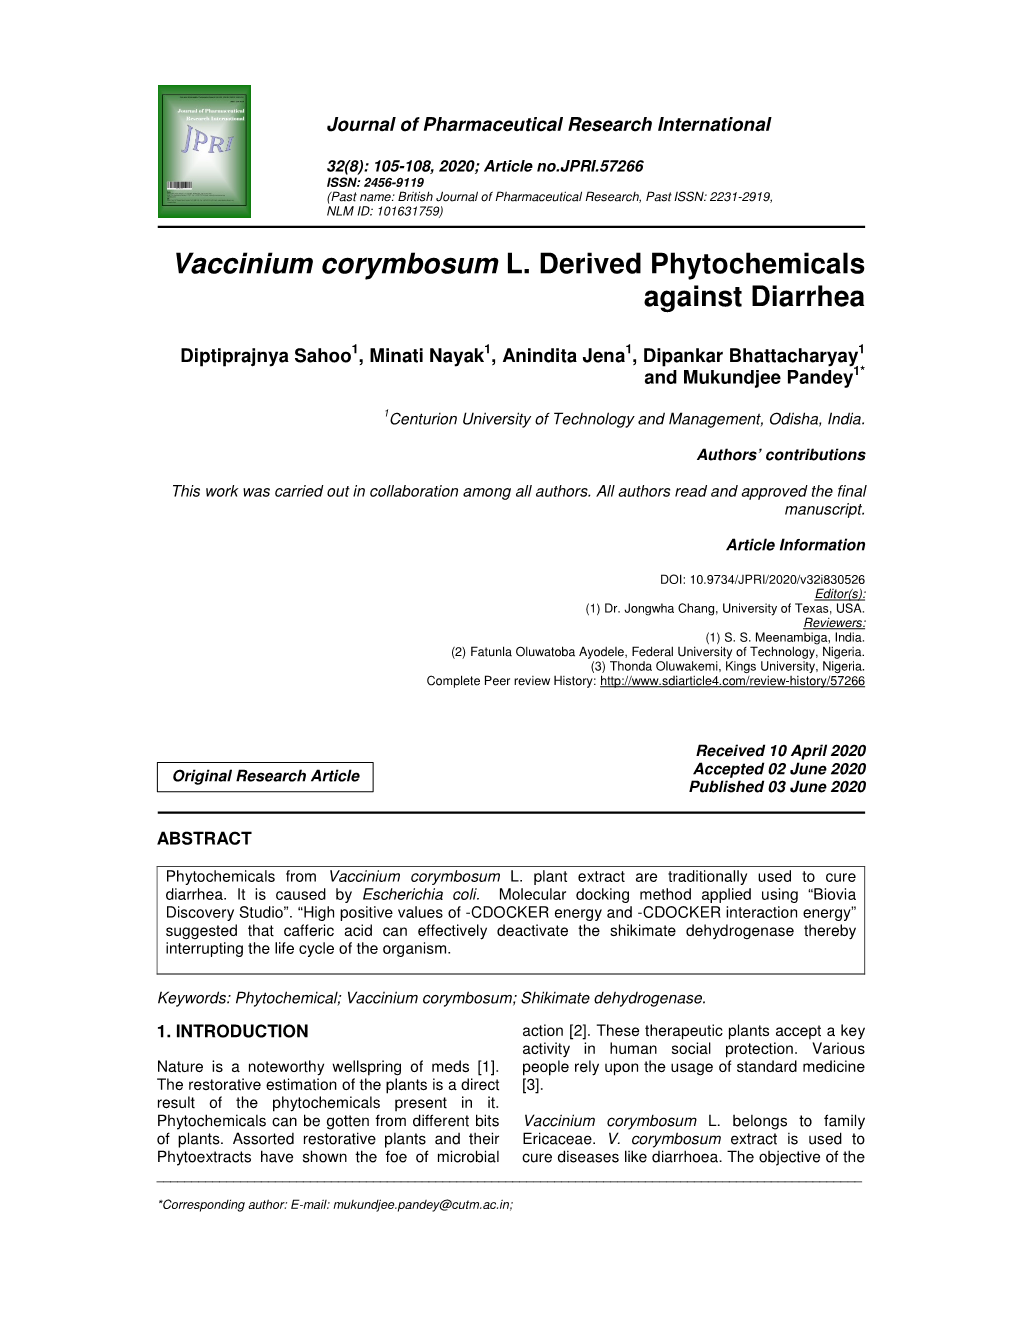 Vaccinium Corymbosum L. Derived Phytochemicals Against Diarrhea